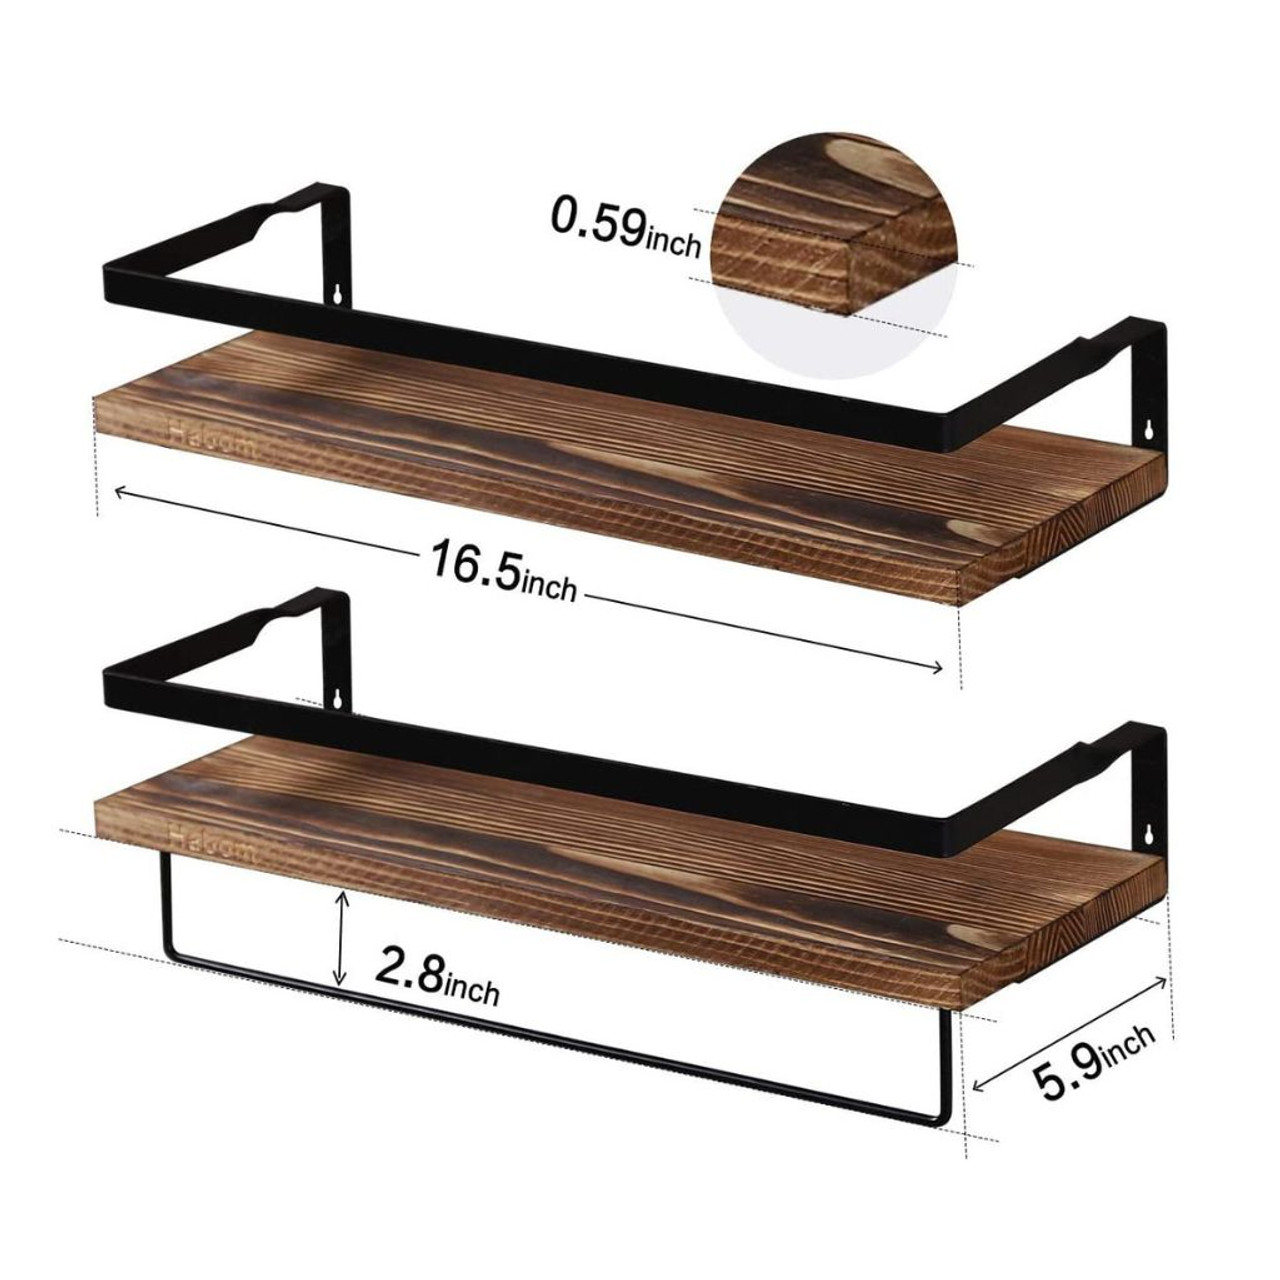 Wall-Mounted Floating Storage Shelves (Set of 2) product image